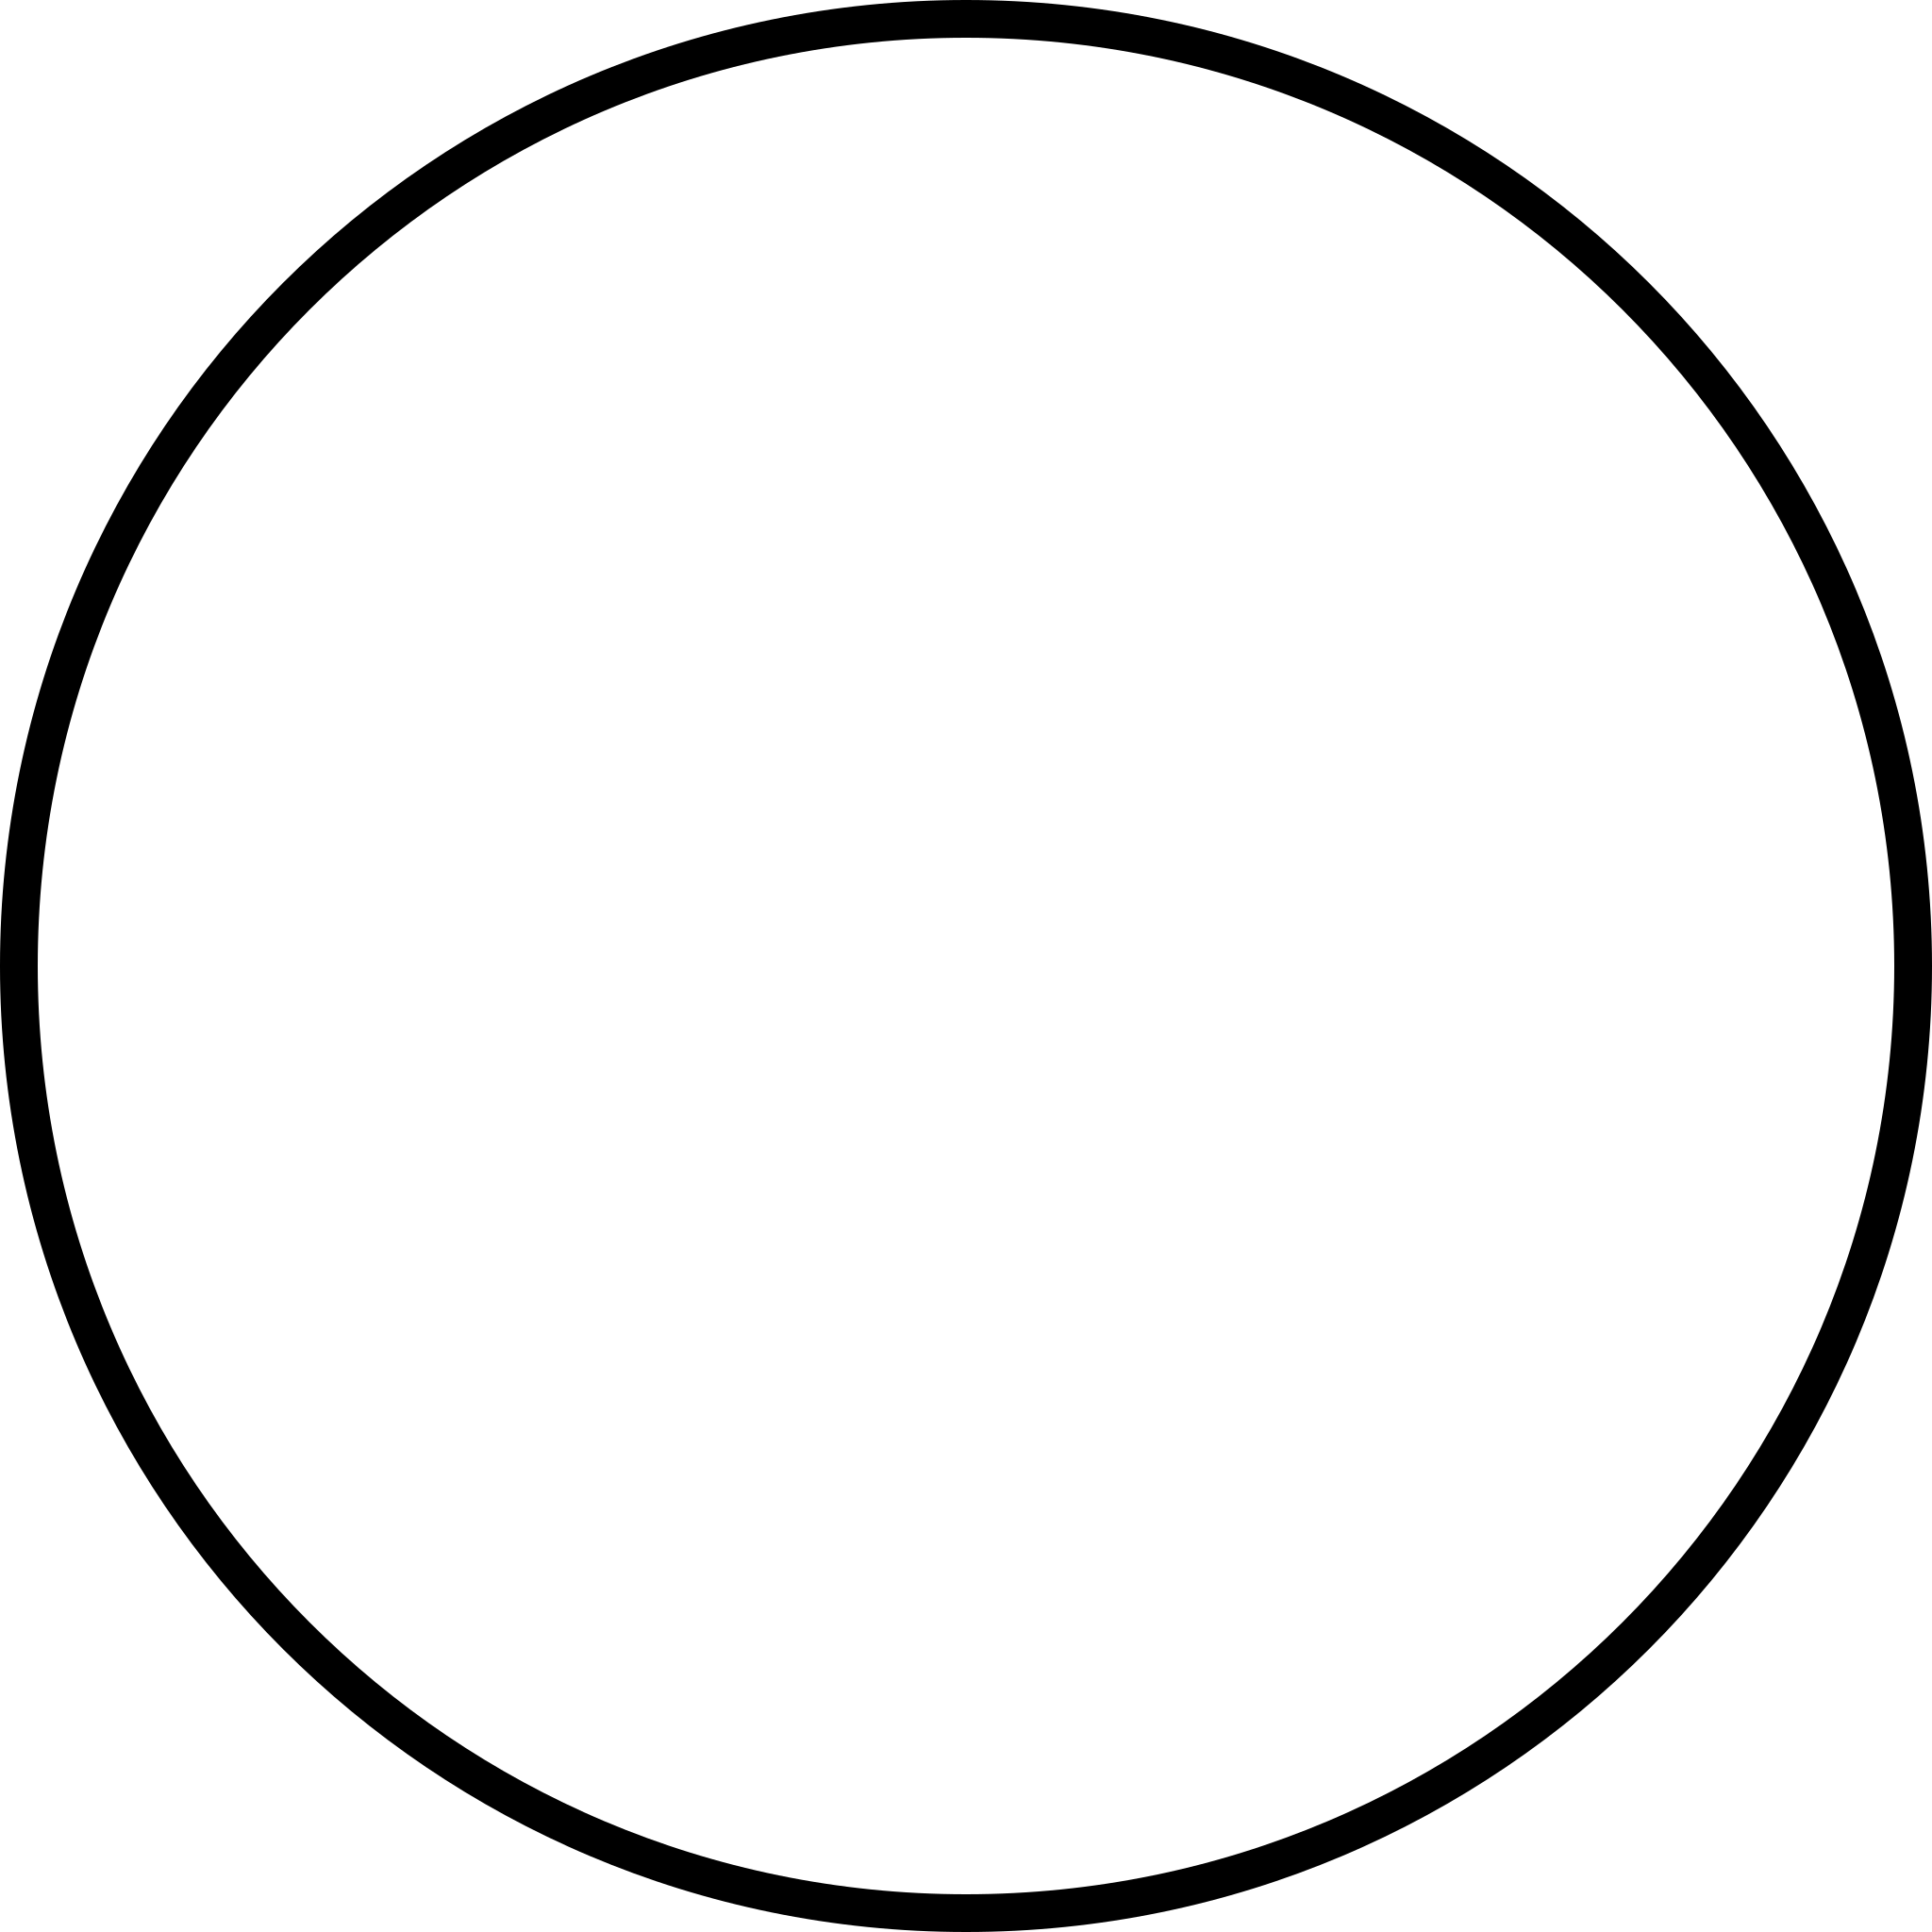 File:Draw-1-black-line.svg - Wikimedia Commons